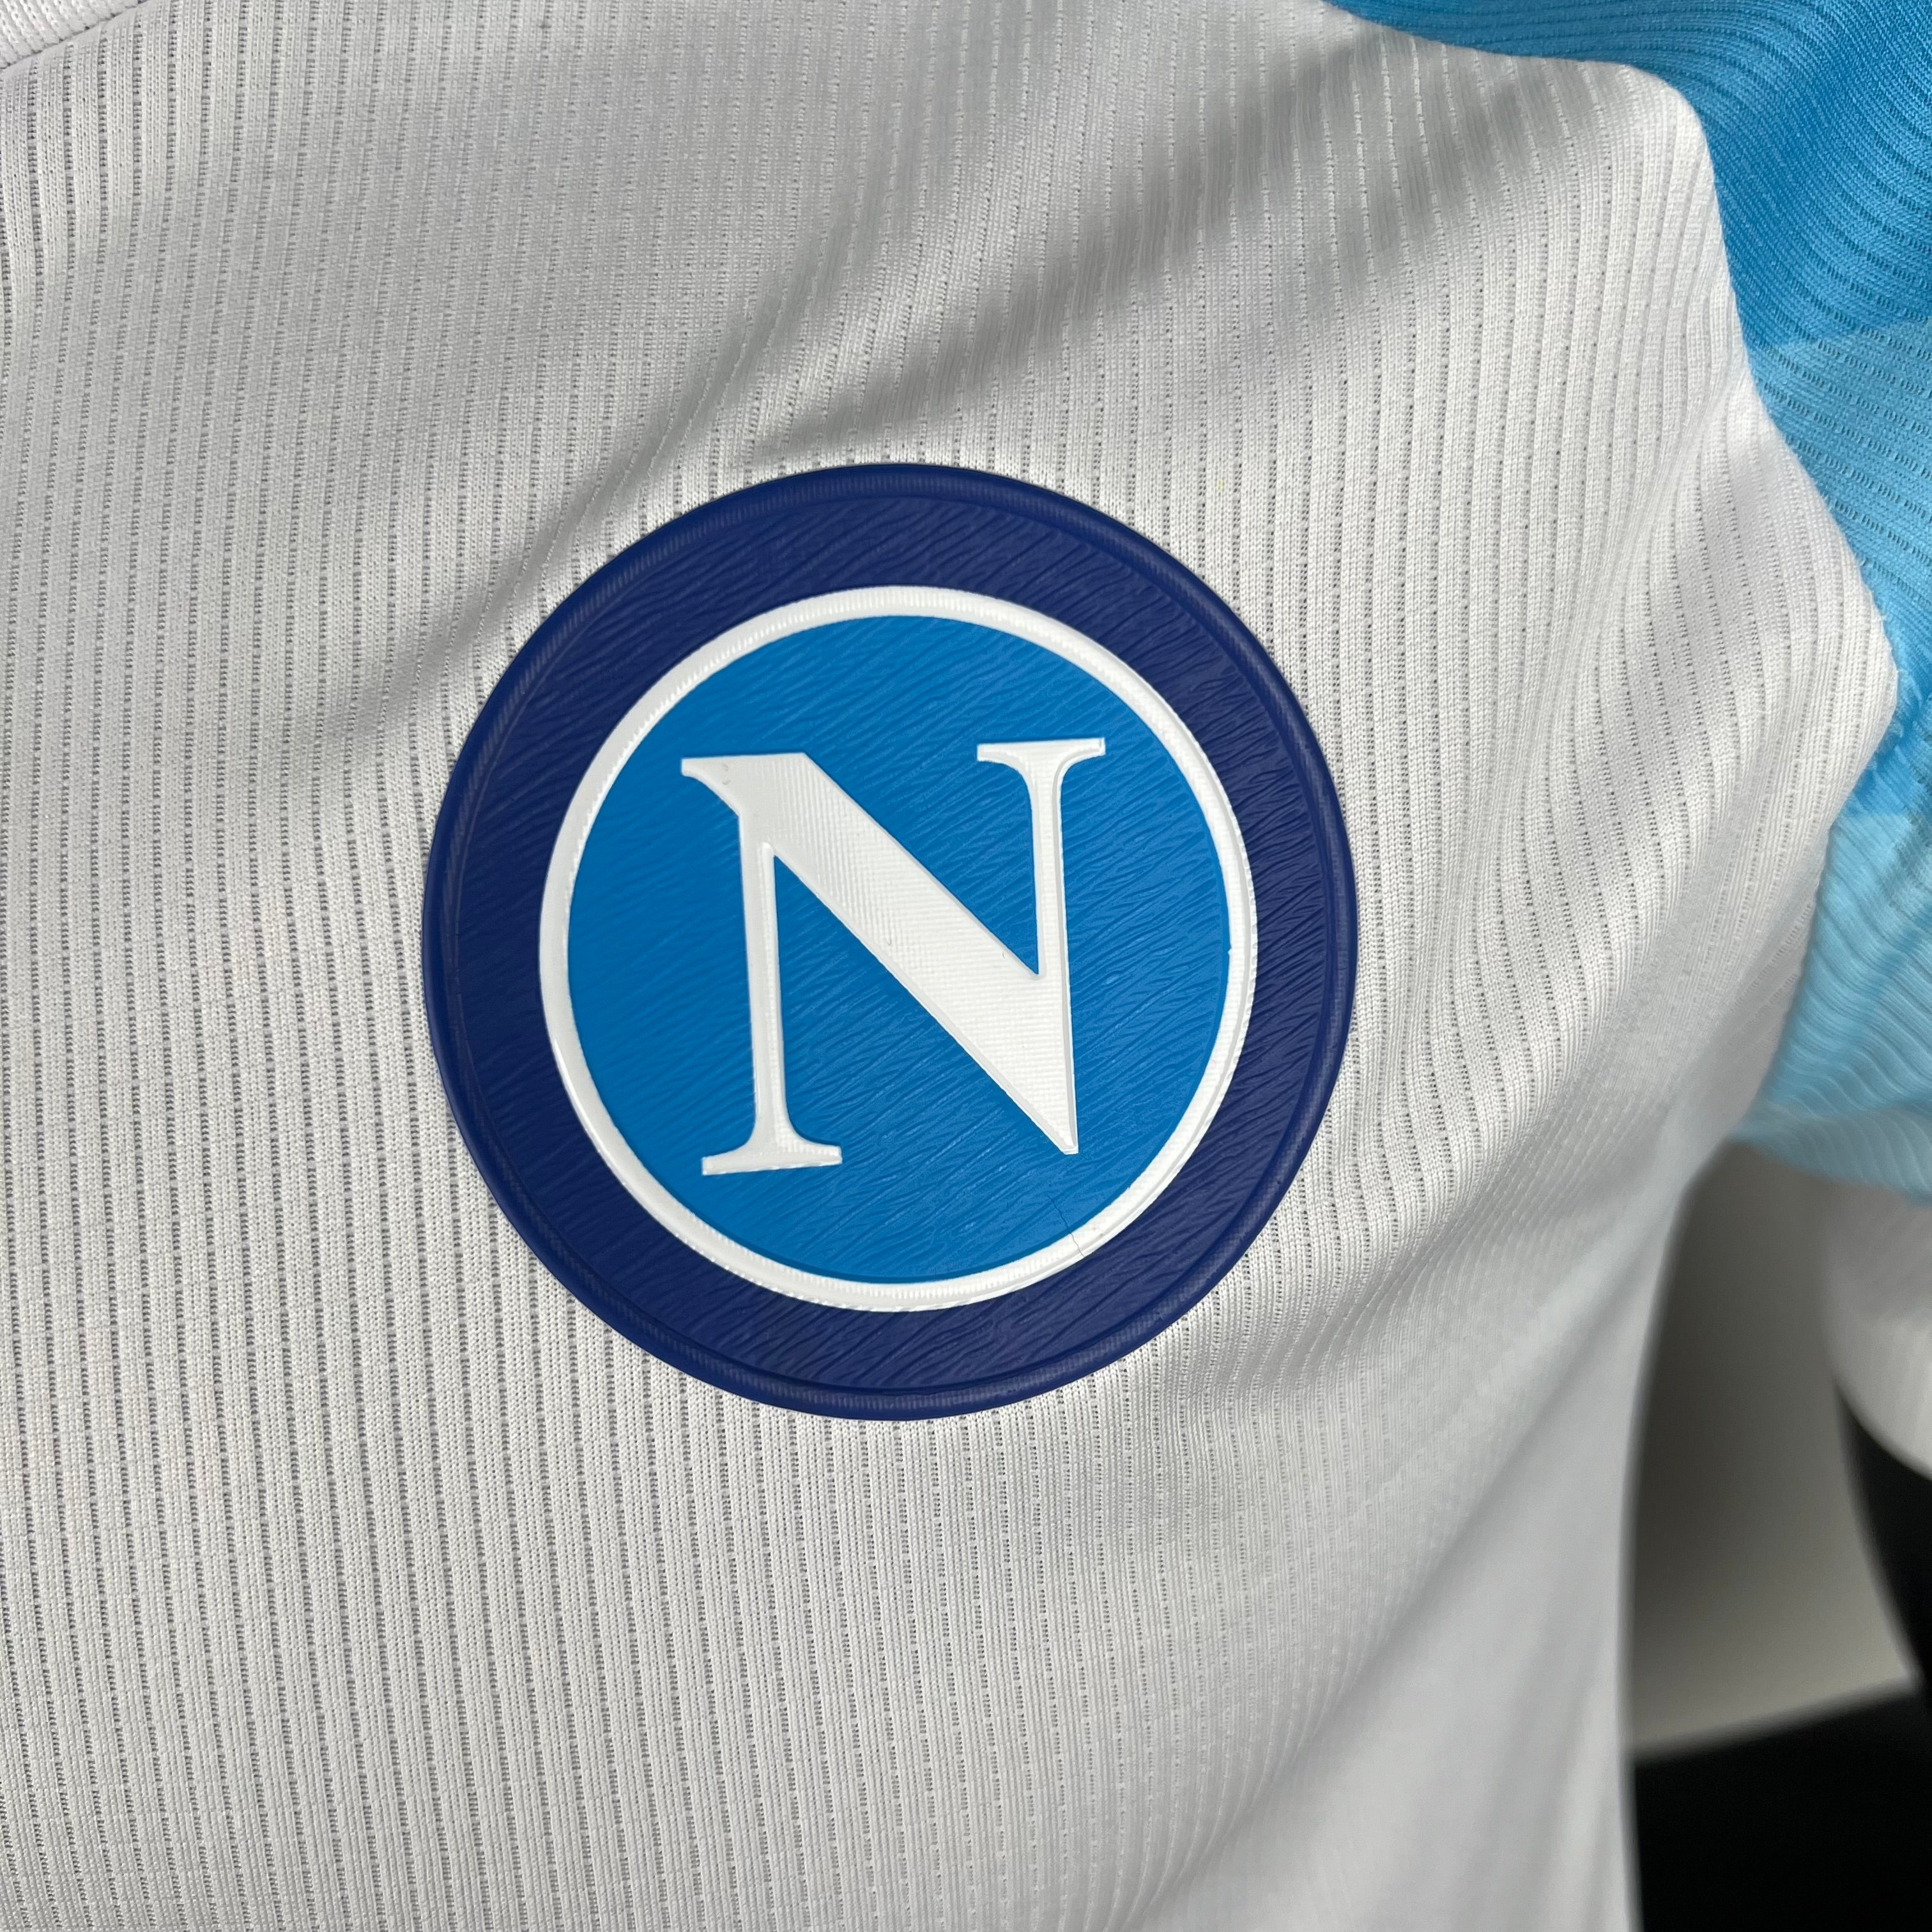 Napoli Face-Game Osimhen - 23/24 Player Version